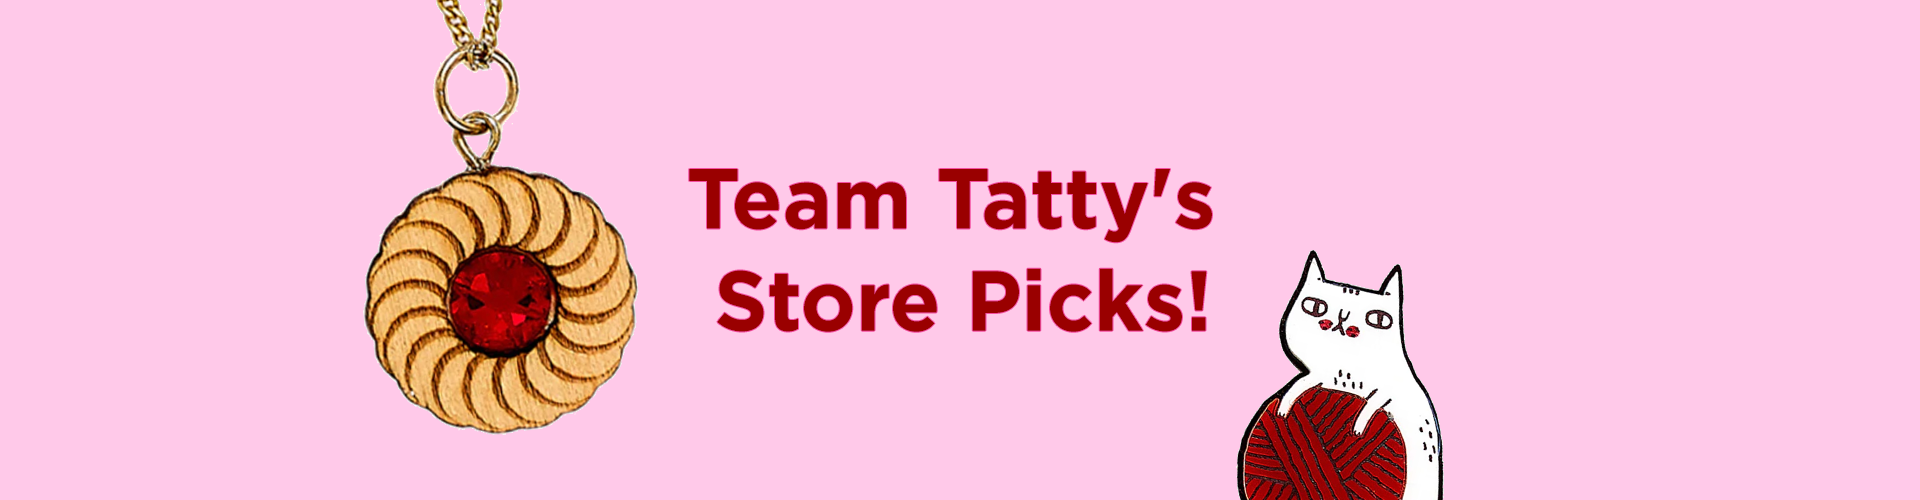 Team Tatty's Store Picks!